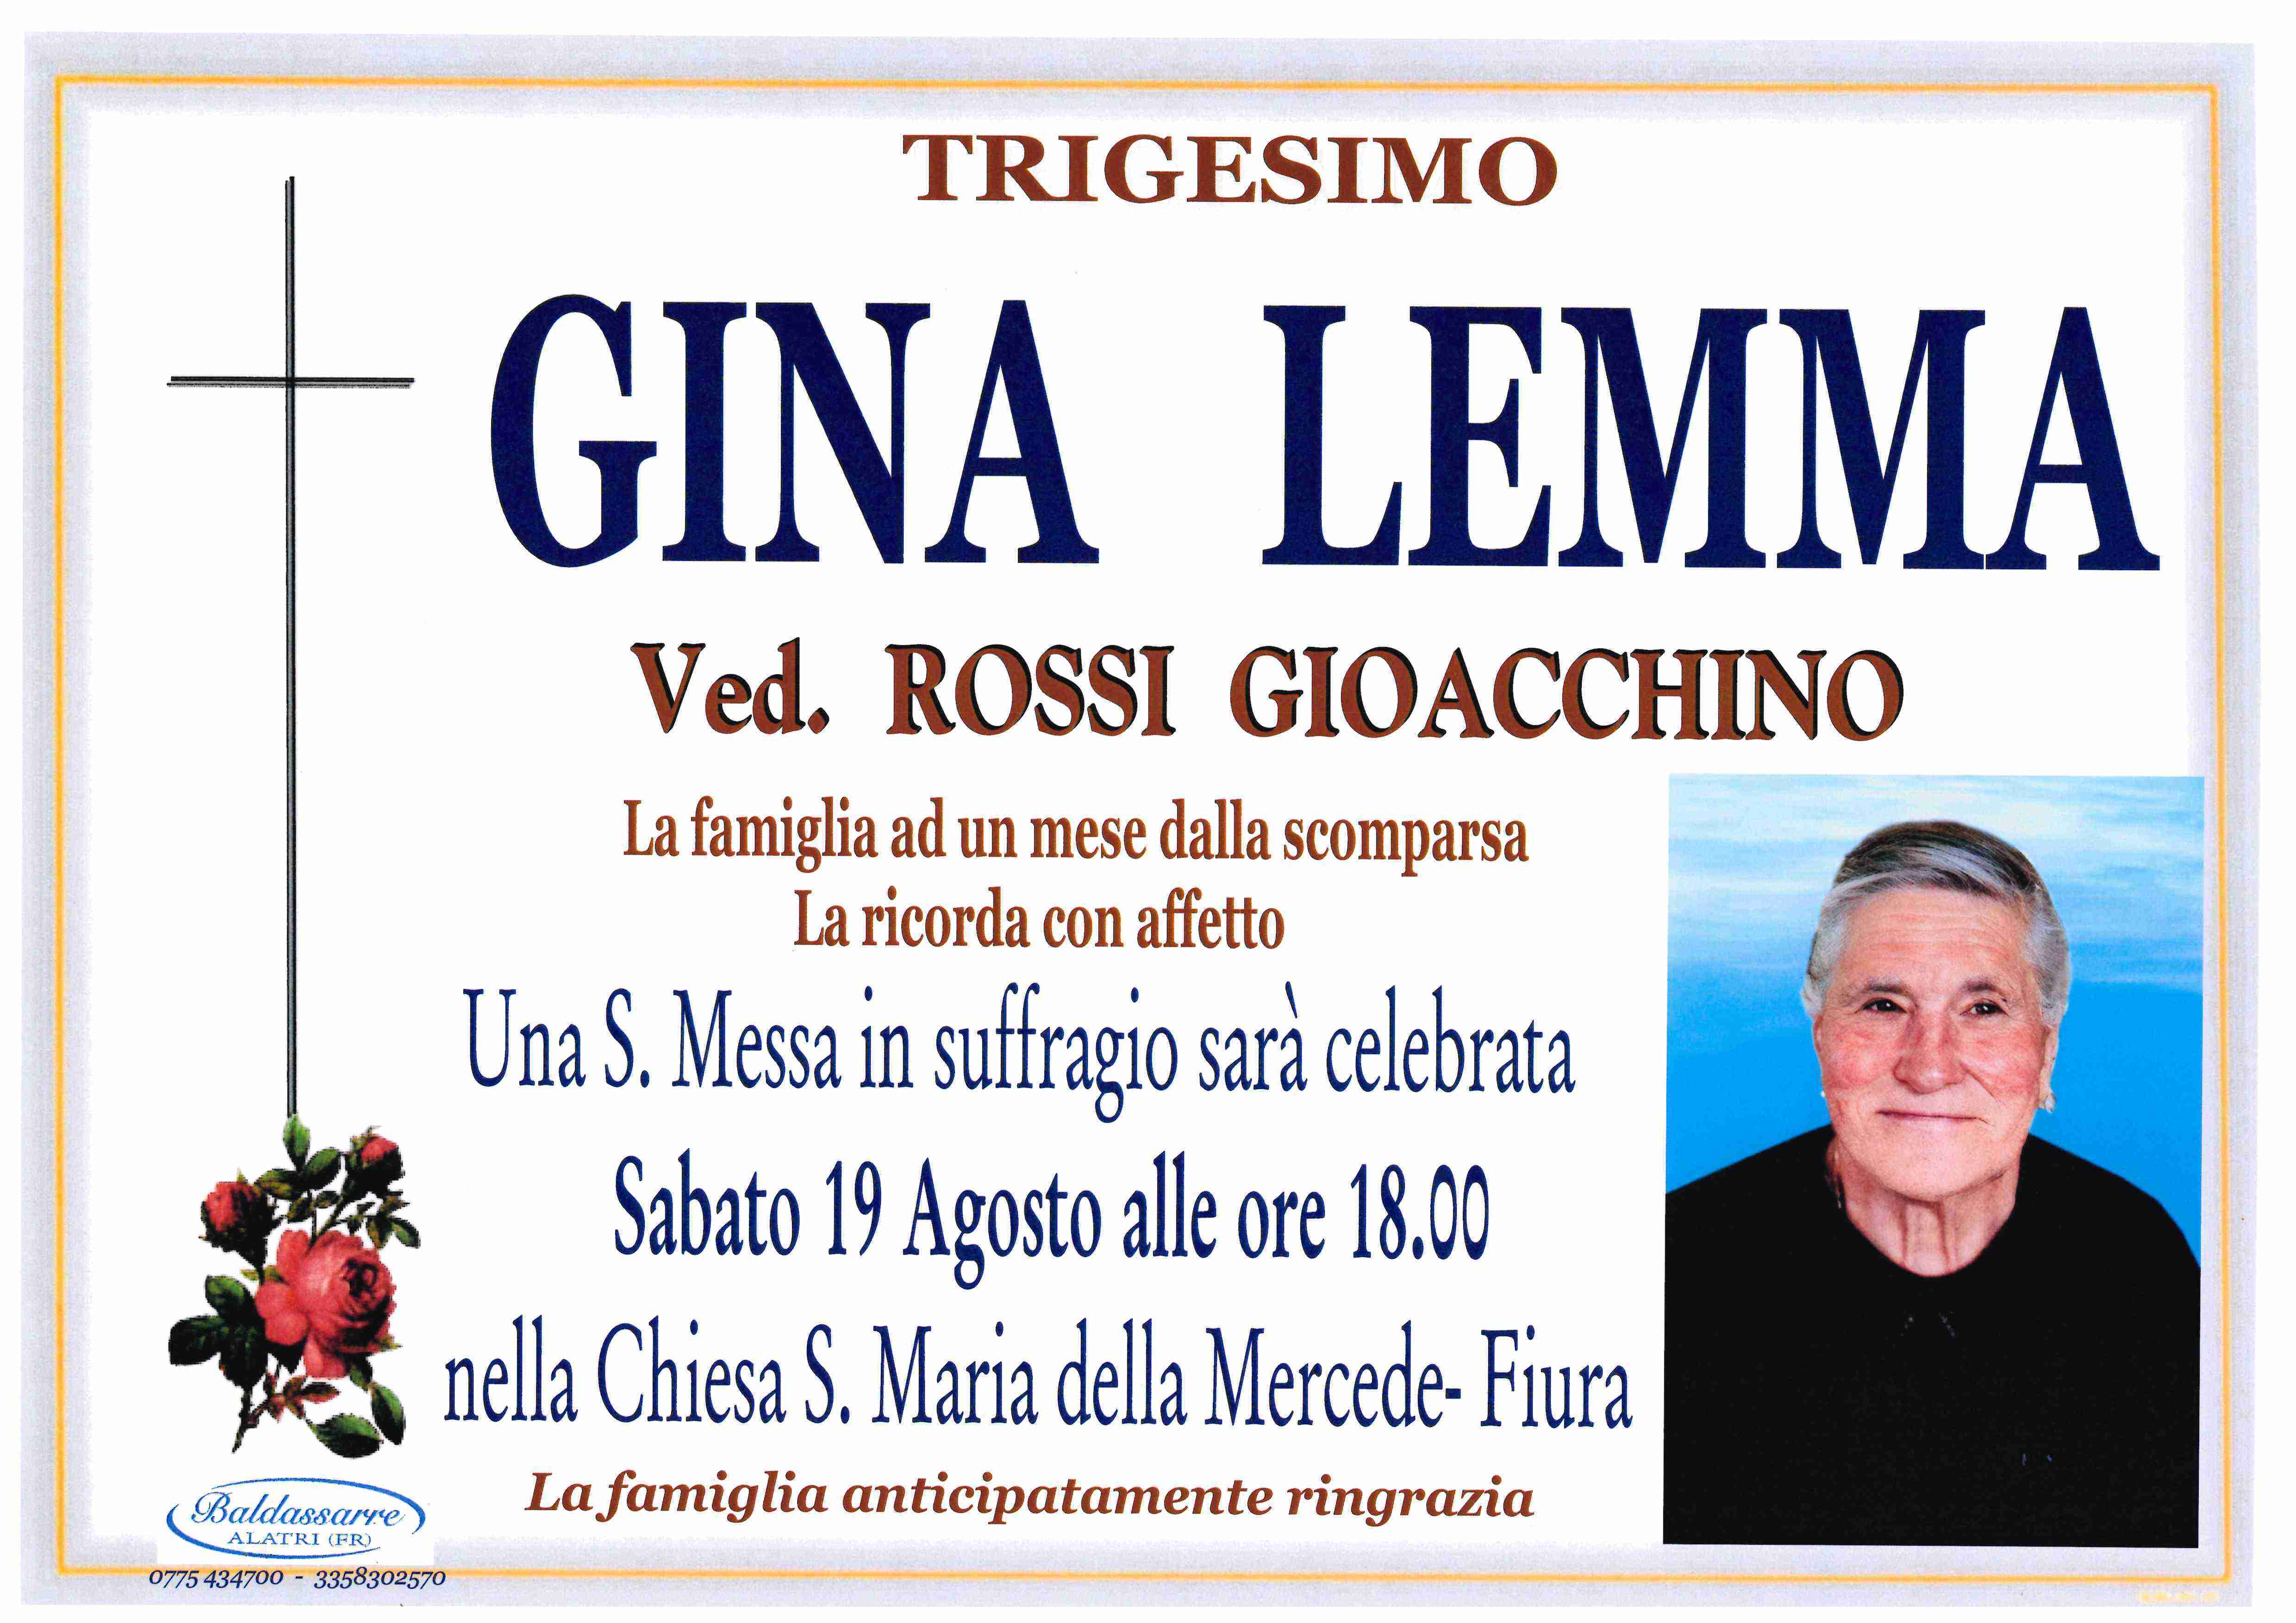 Gina Lemma